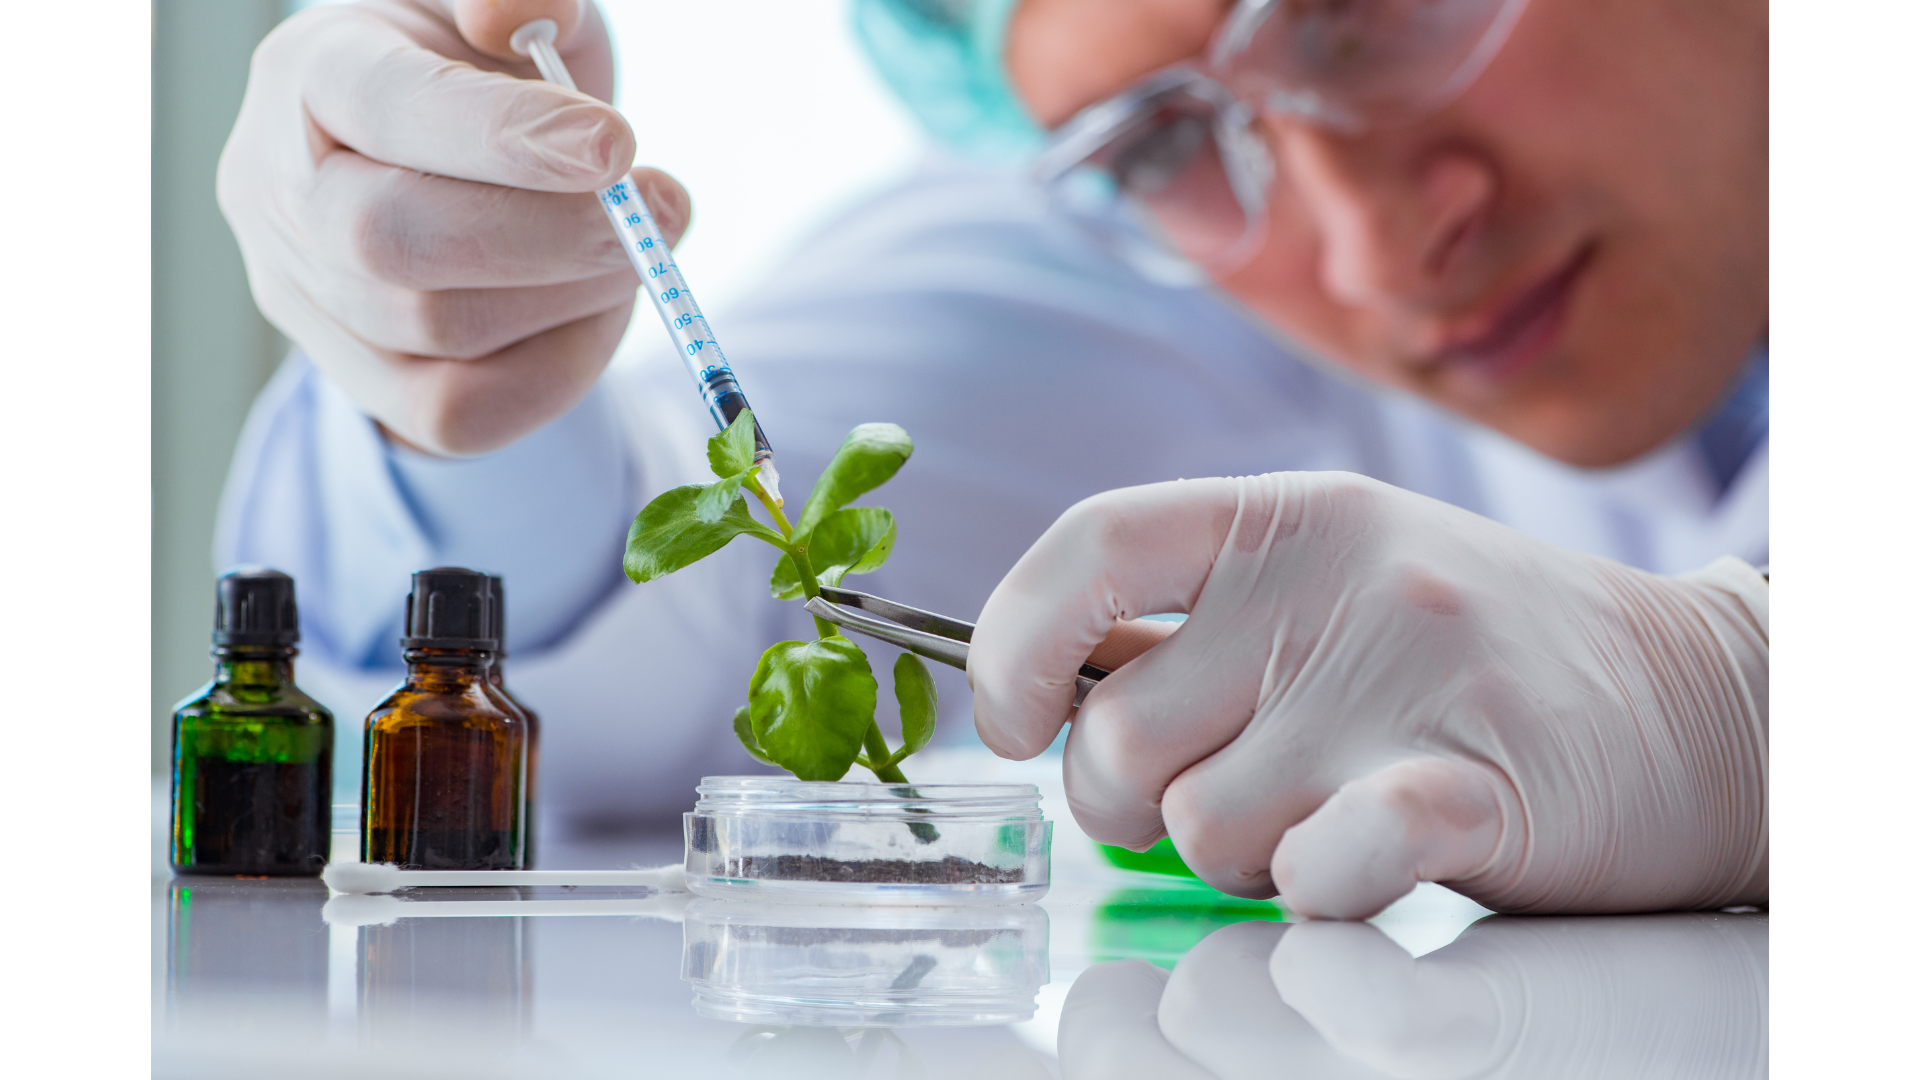 biotechnology / pharmaceuticals / laboratory